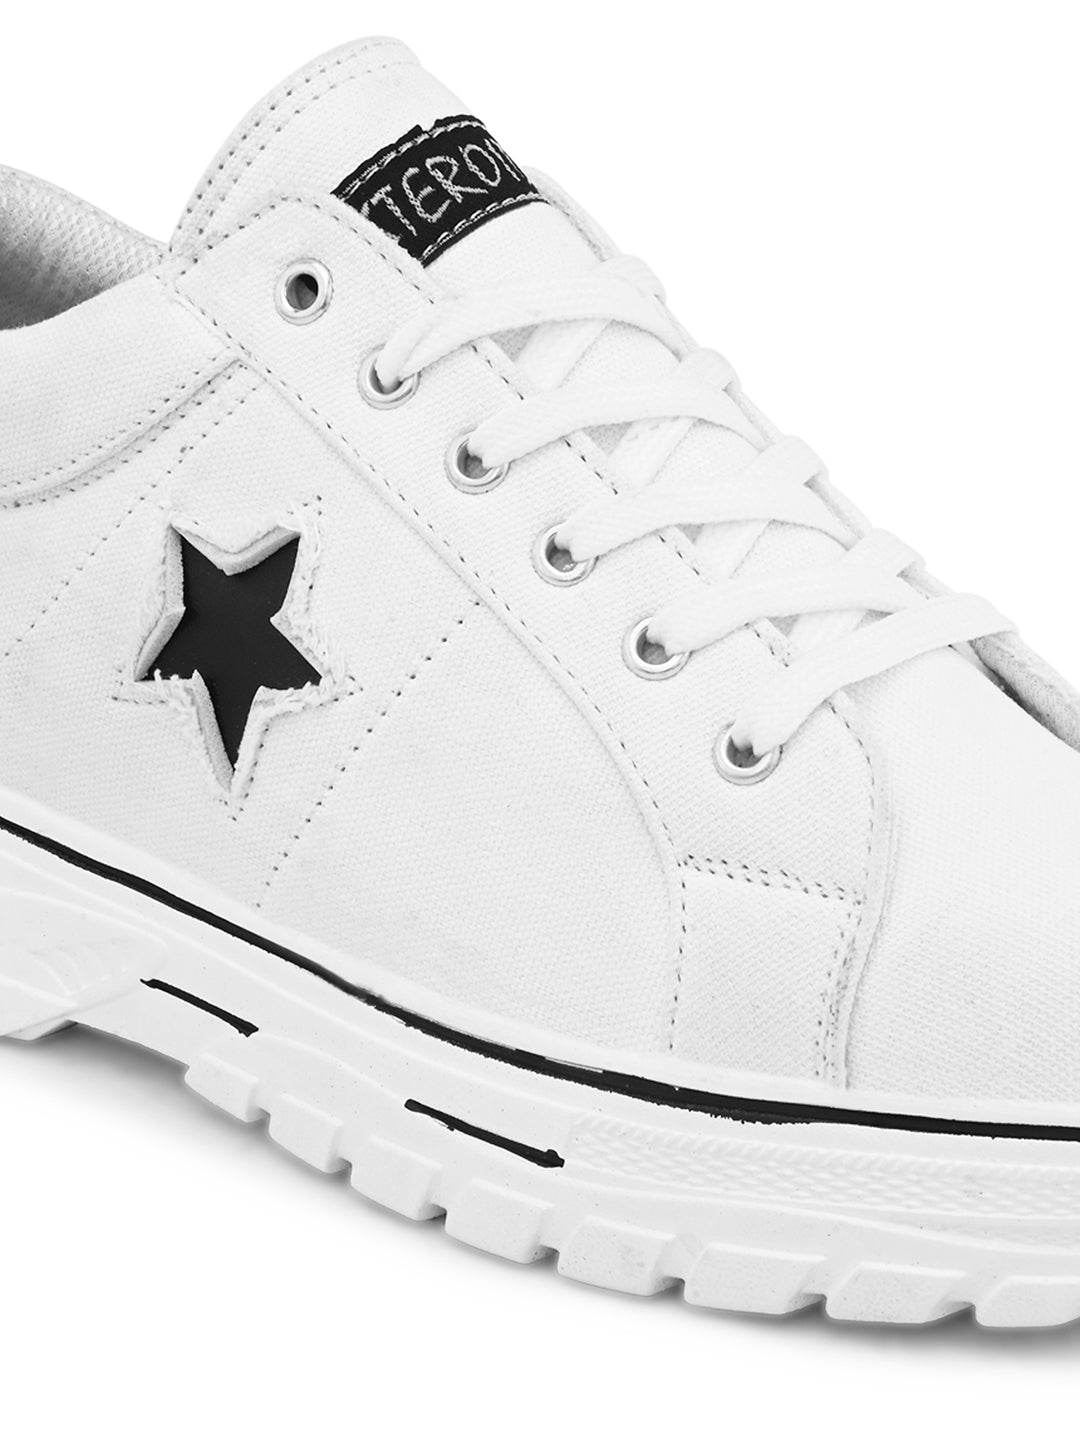 STAR Canvas Premium Sneakers. (151-WHT)